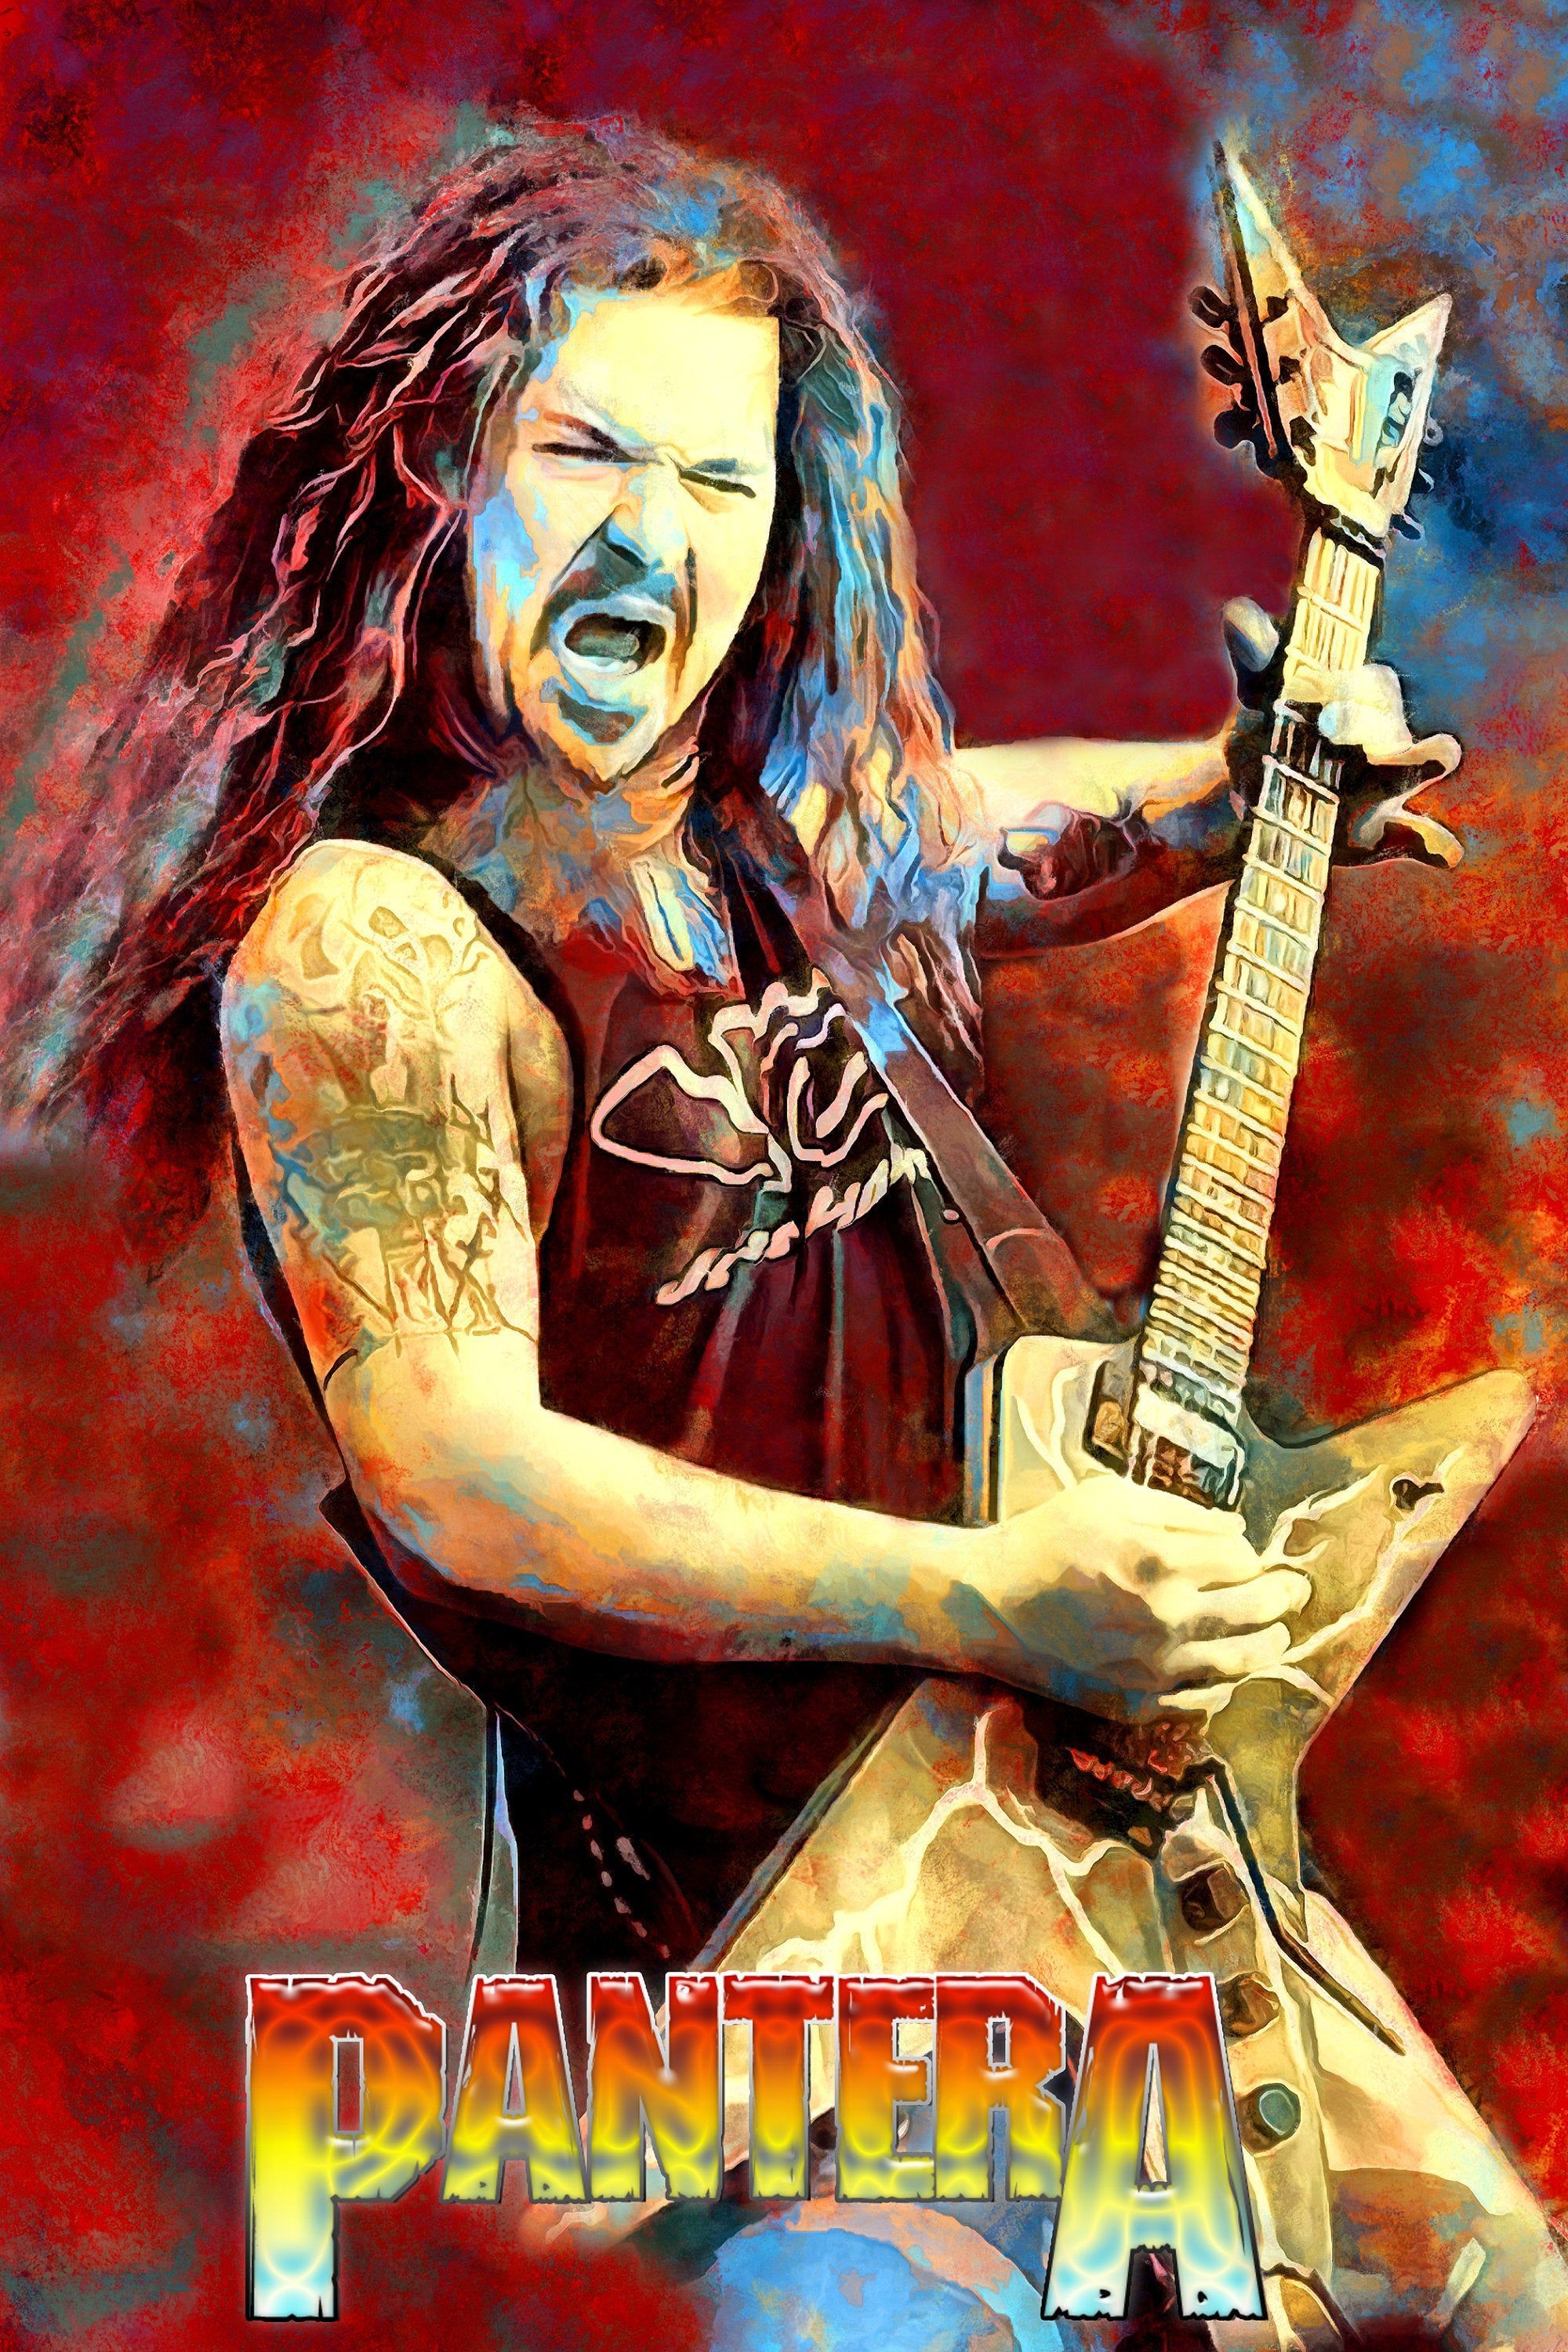 This Love Pantera Dimebag Darrell Poster Art Large 20x30 Print Free US Shipping!. Rock poster art, Heavy metal music, Pantera band